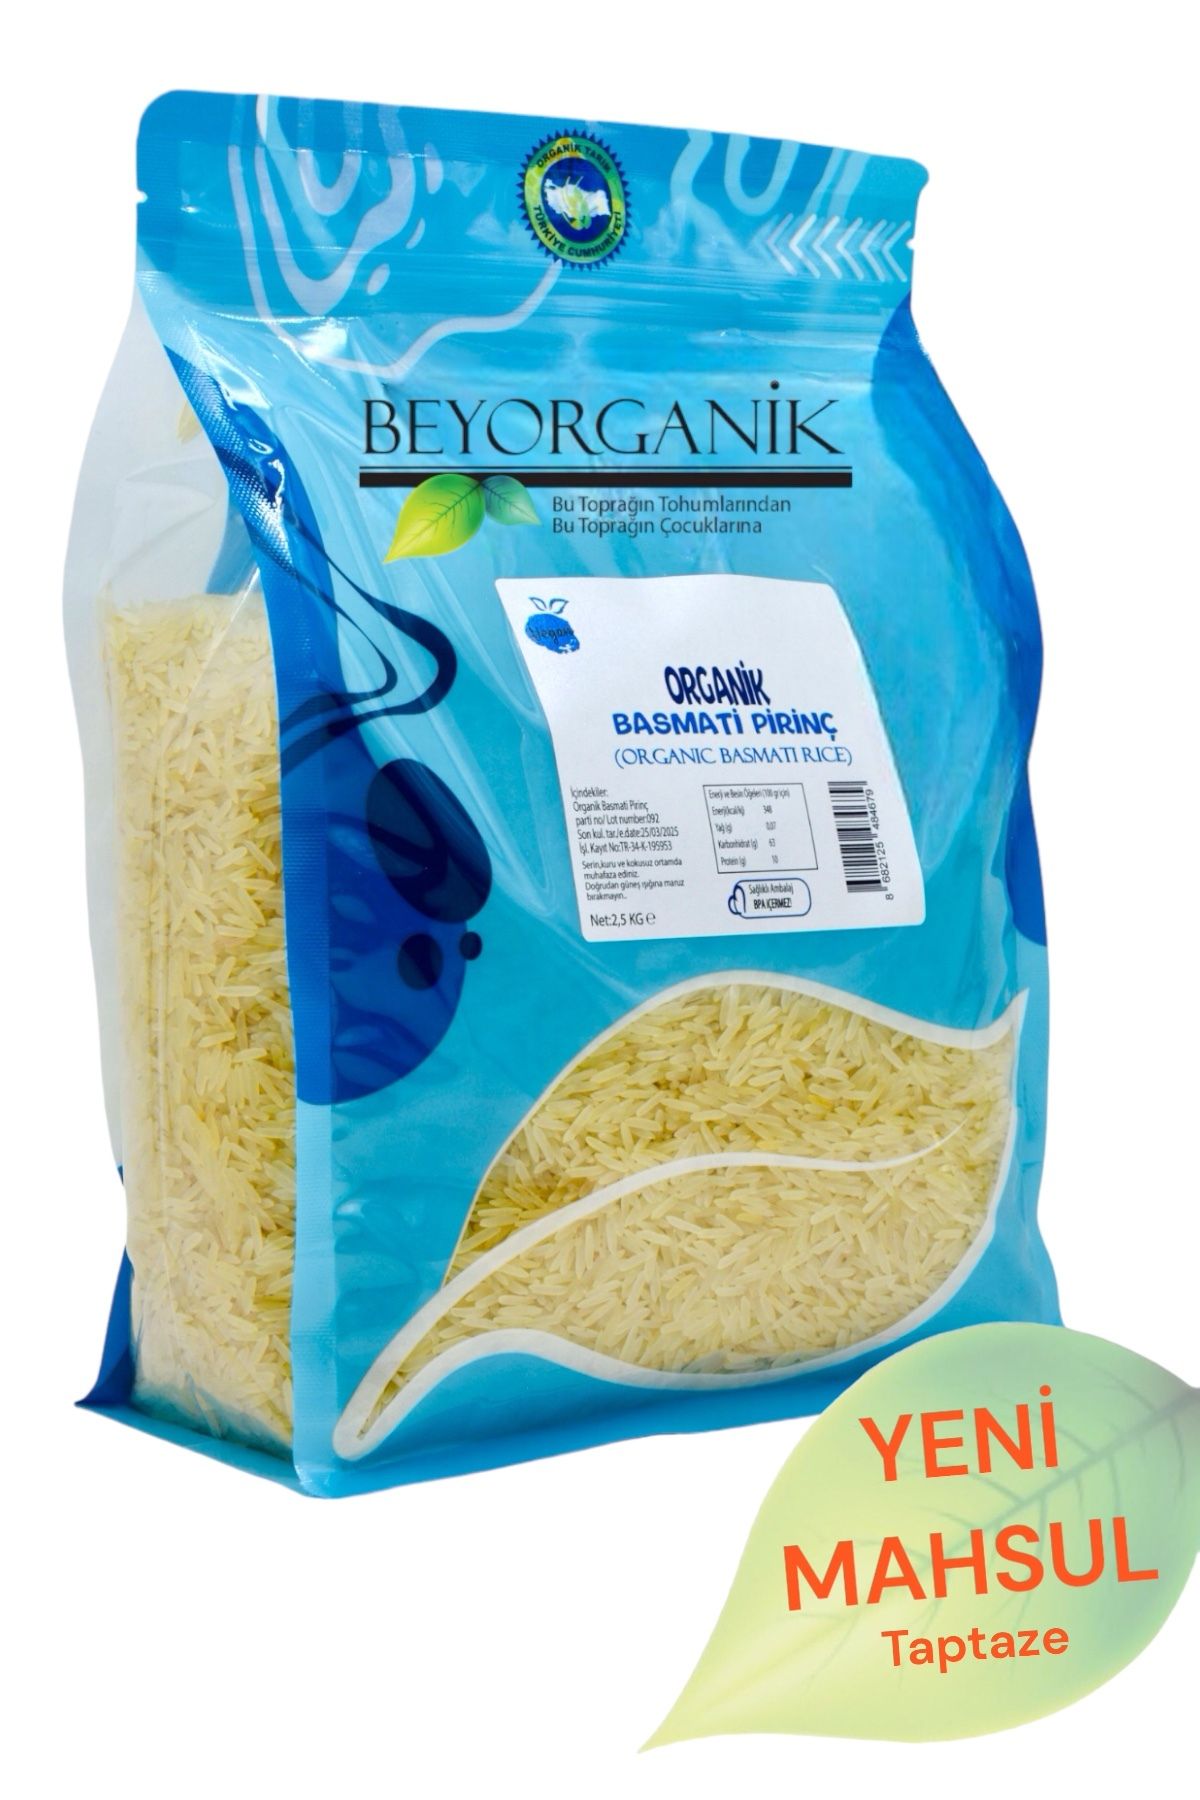 BEYORGANİK Organik Basmati Pirinç 2,5 kg